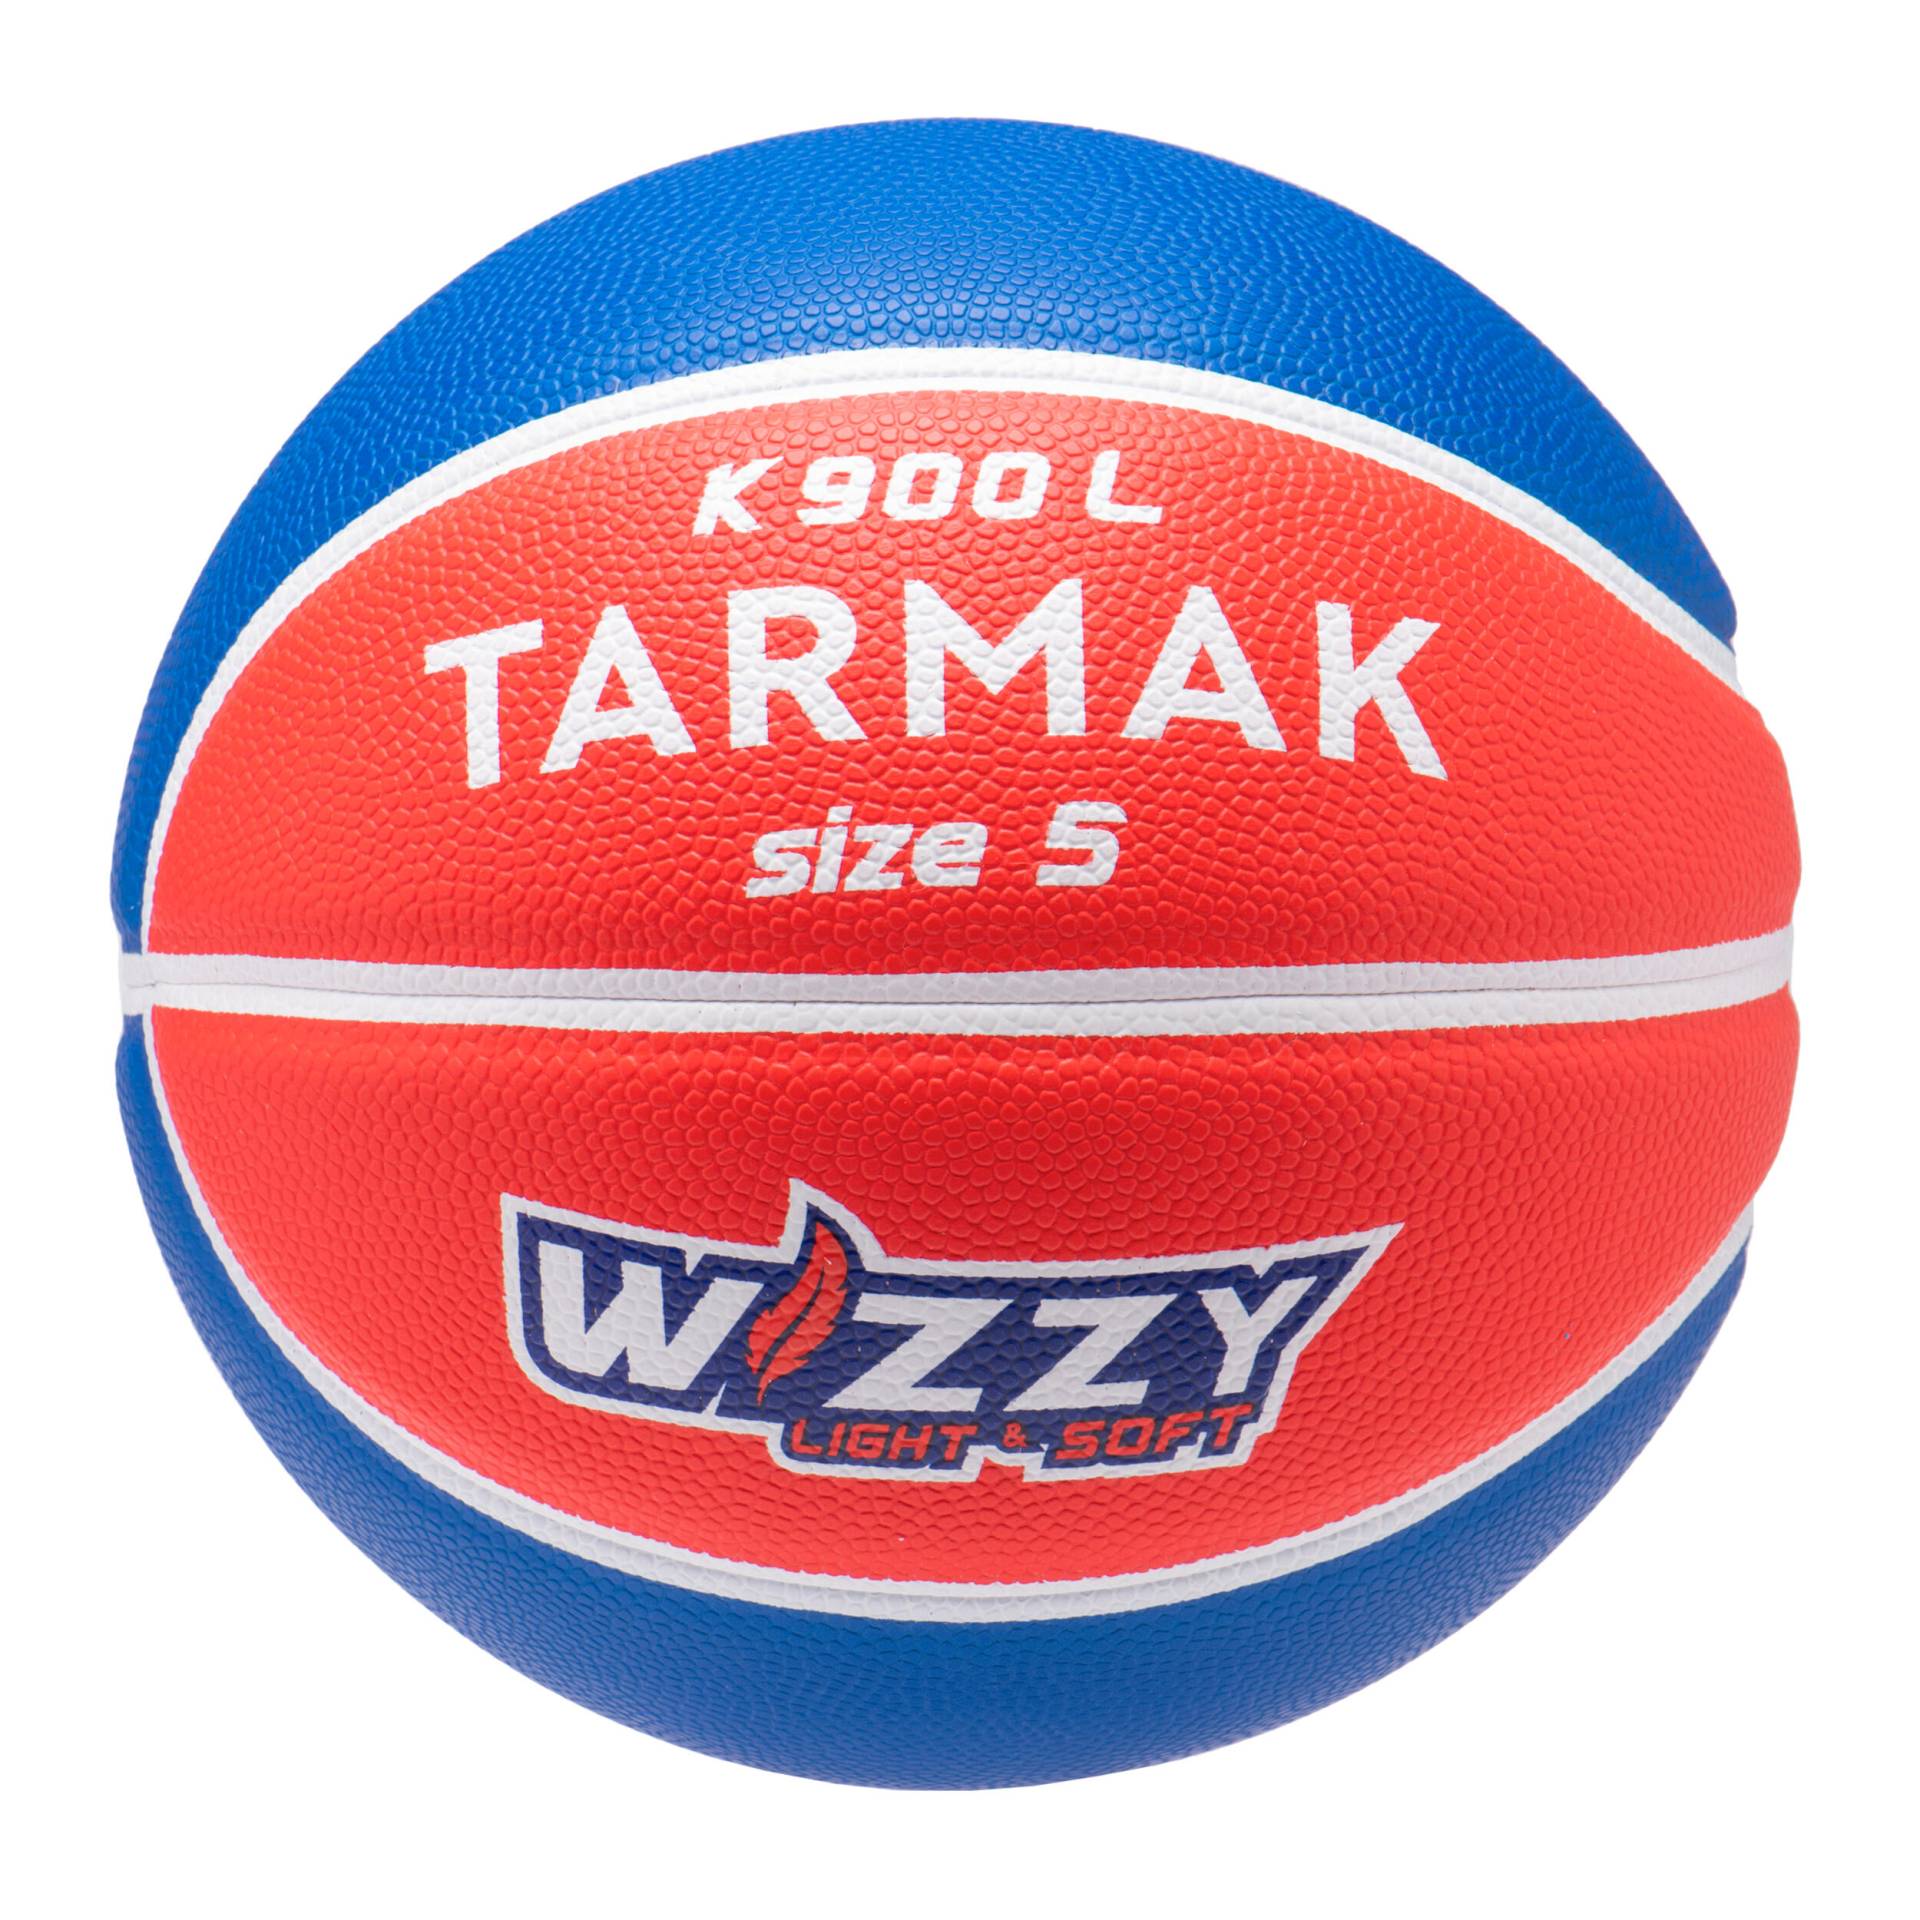 Basketball Grösse 5 Light & Soft - K900 Wizzy blau/rot von TARMAK